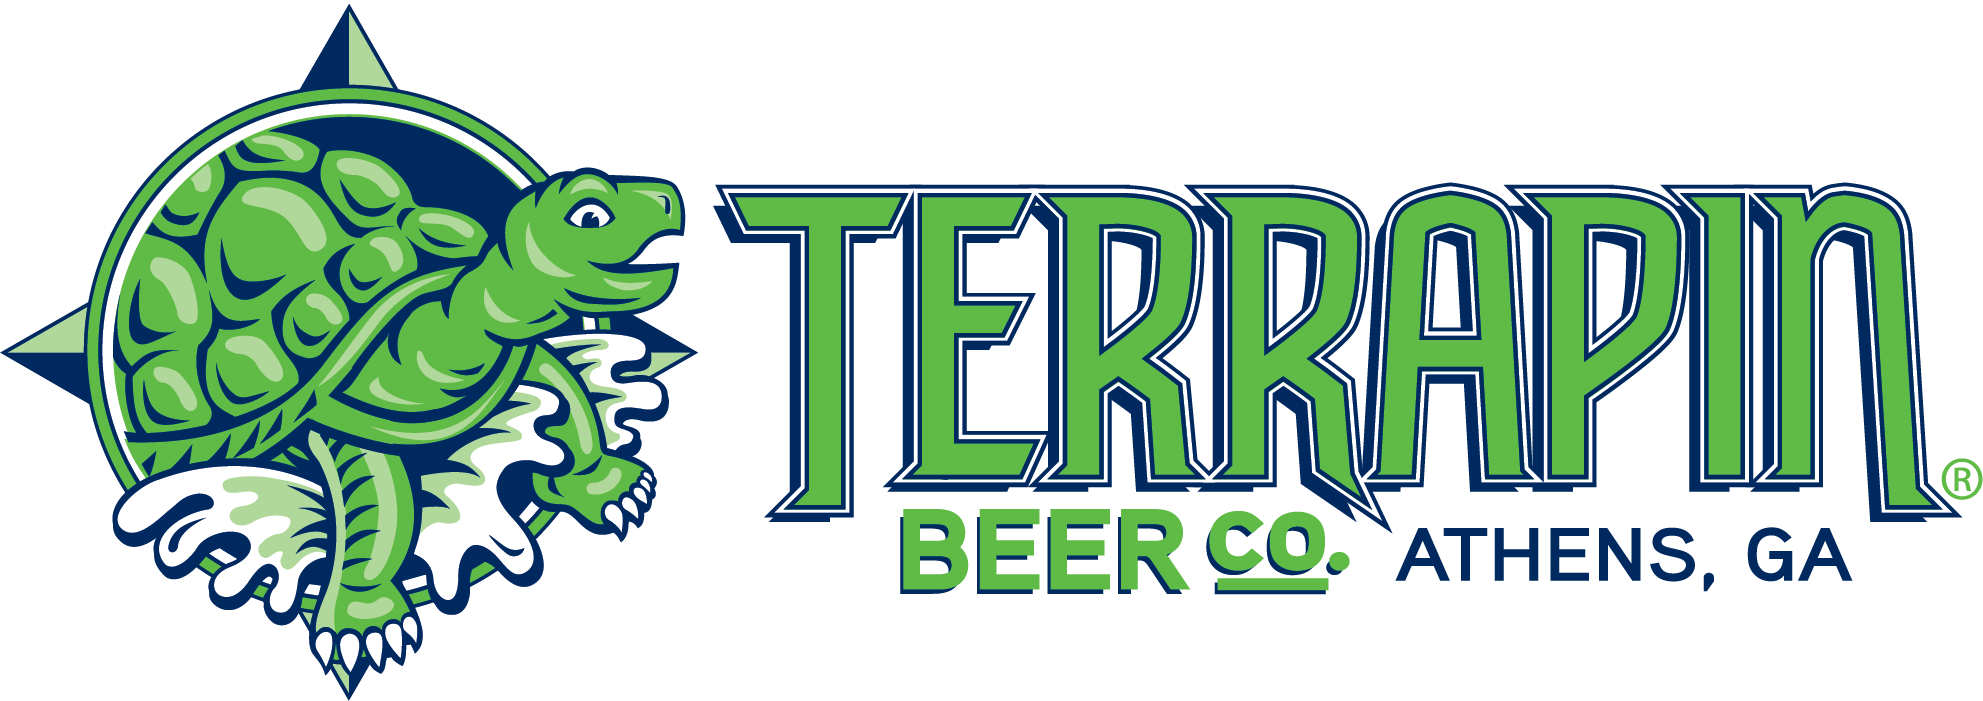 Terrapin Beer Company logo